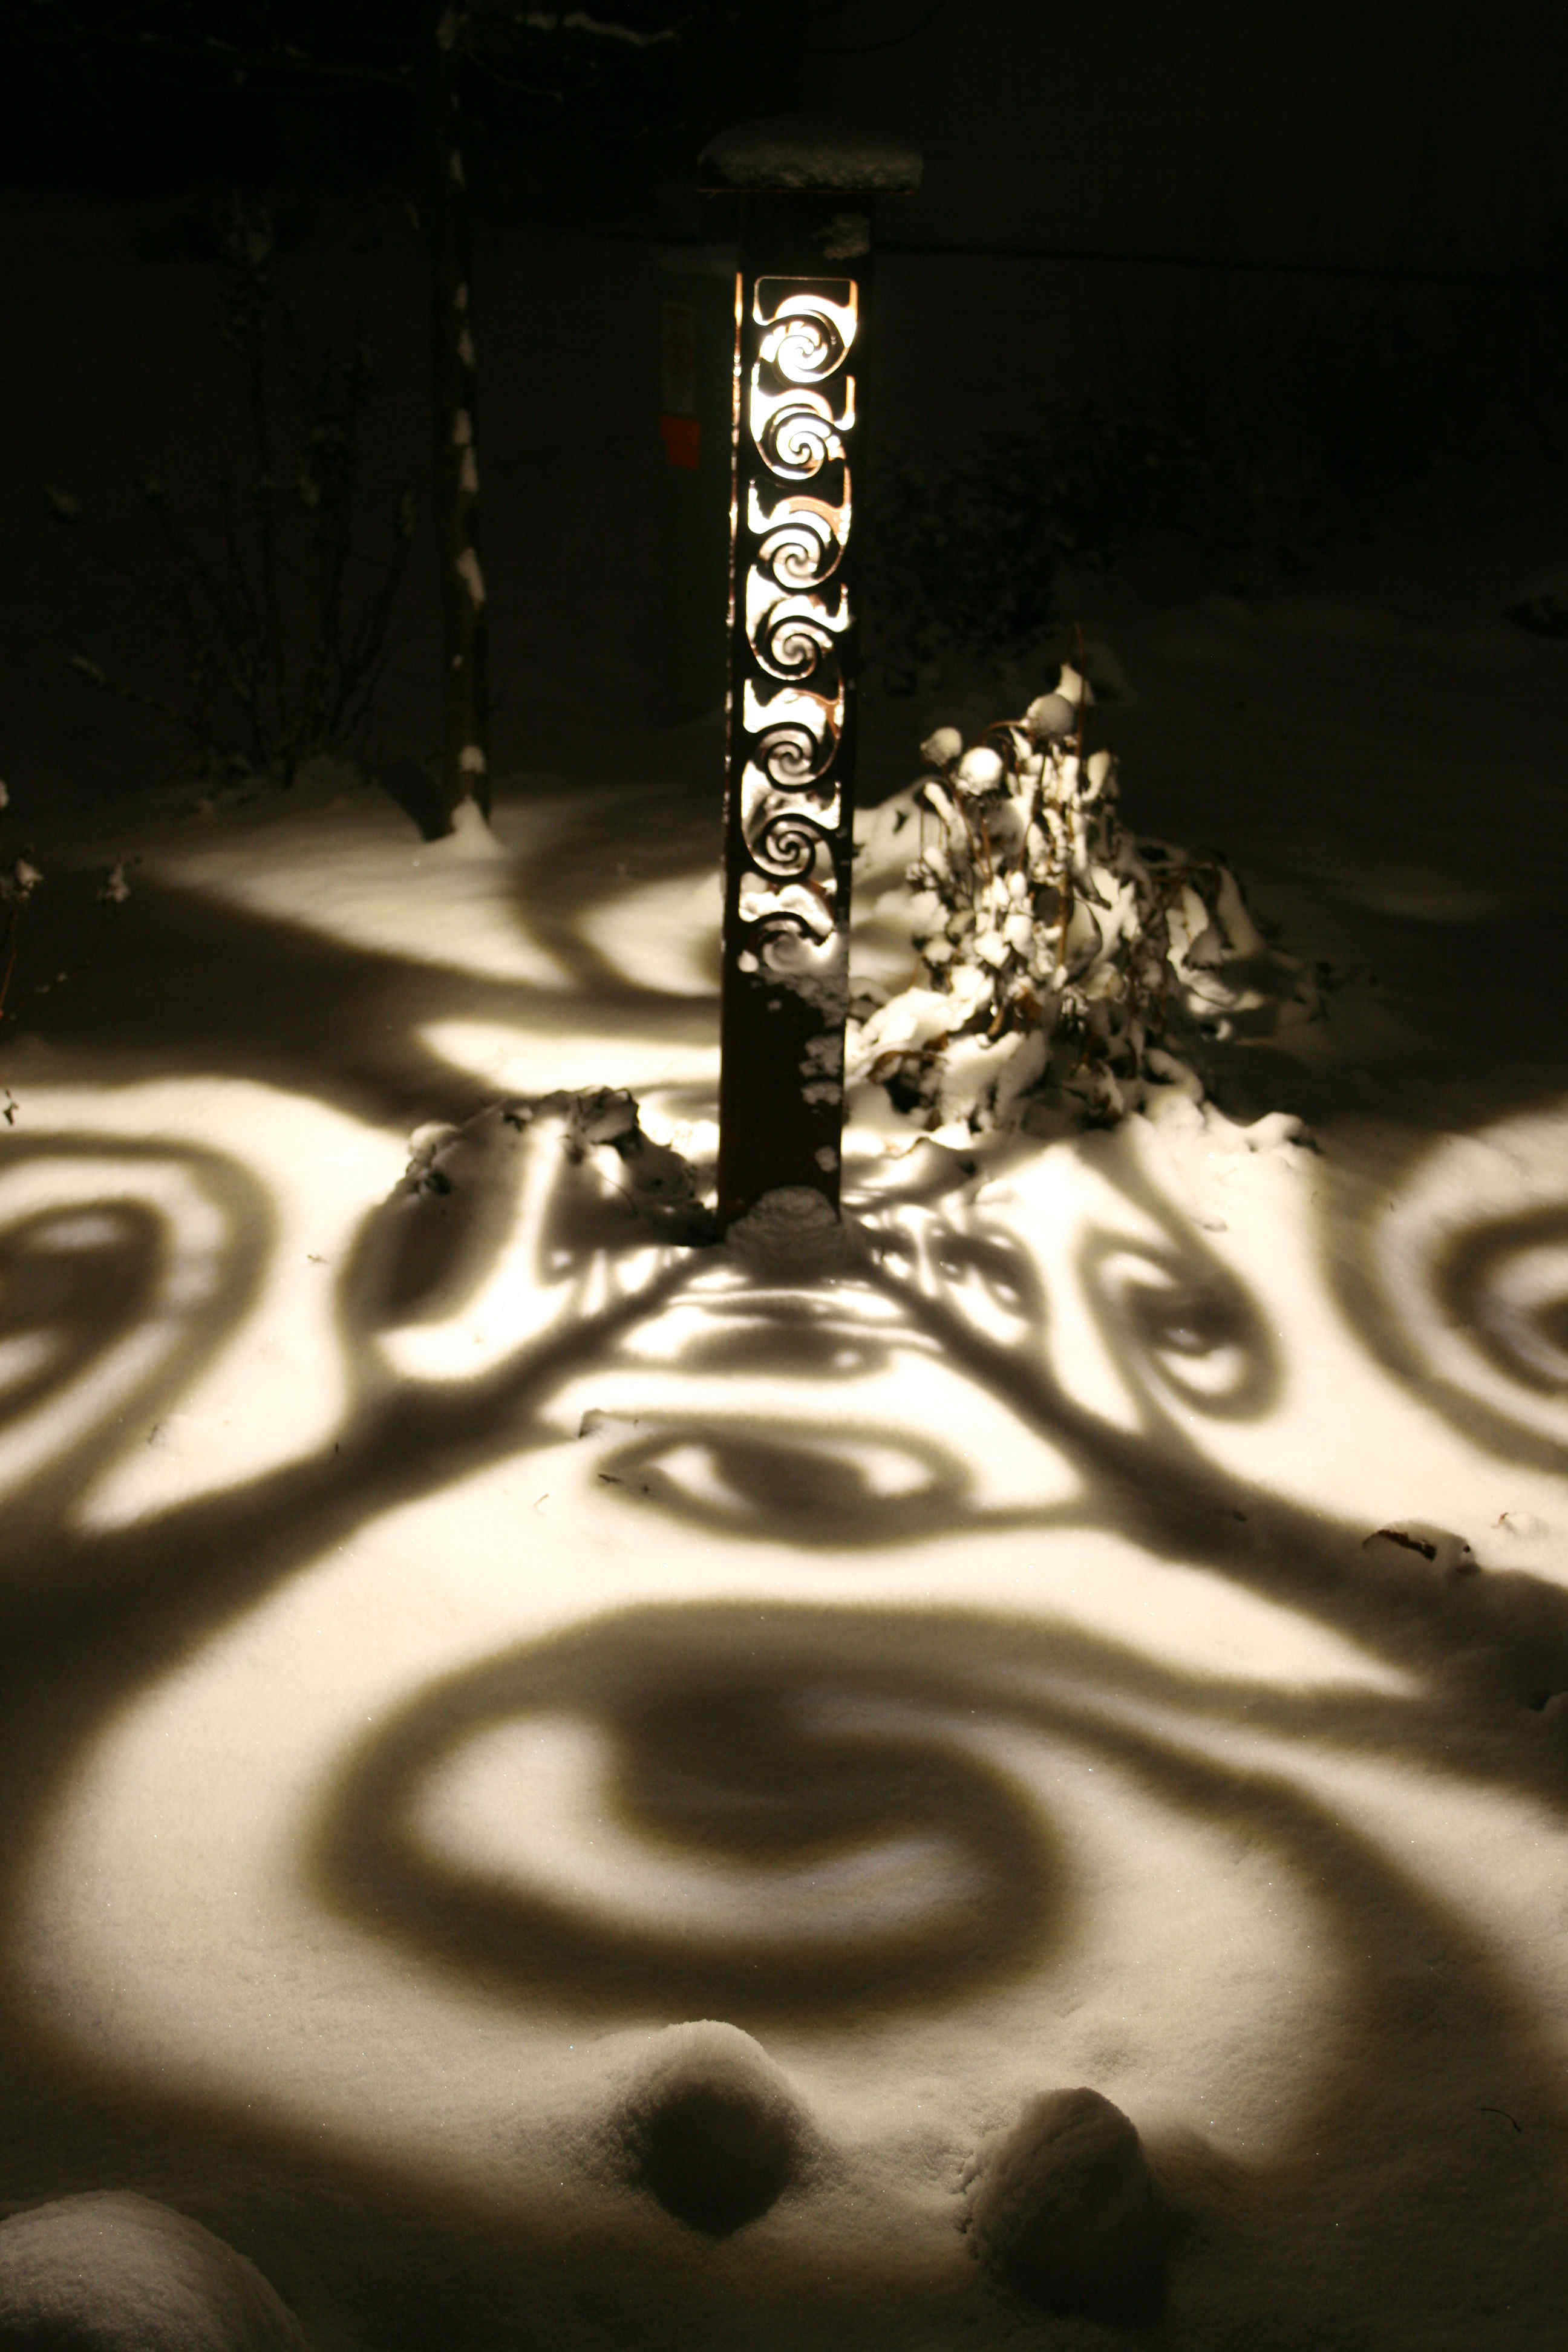 Swirling decorative lighting patterns